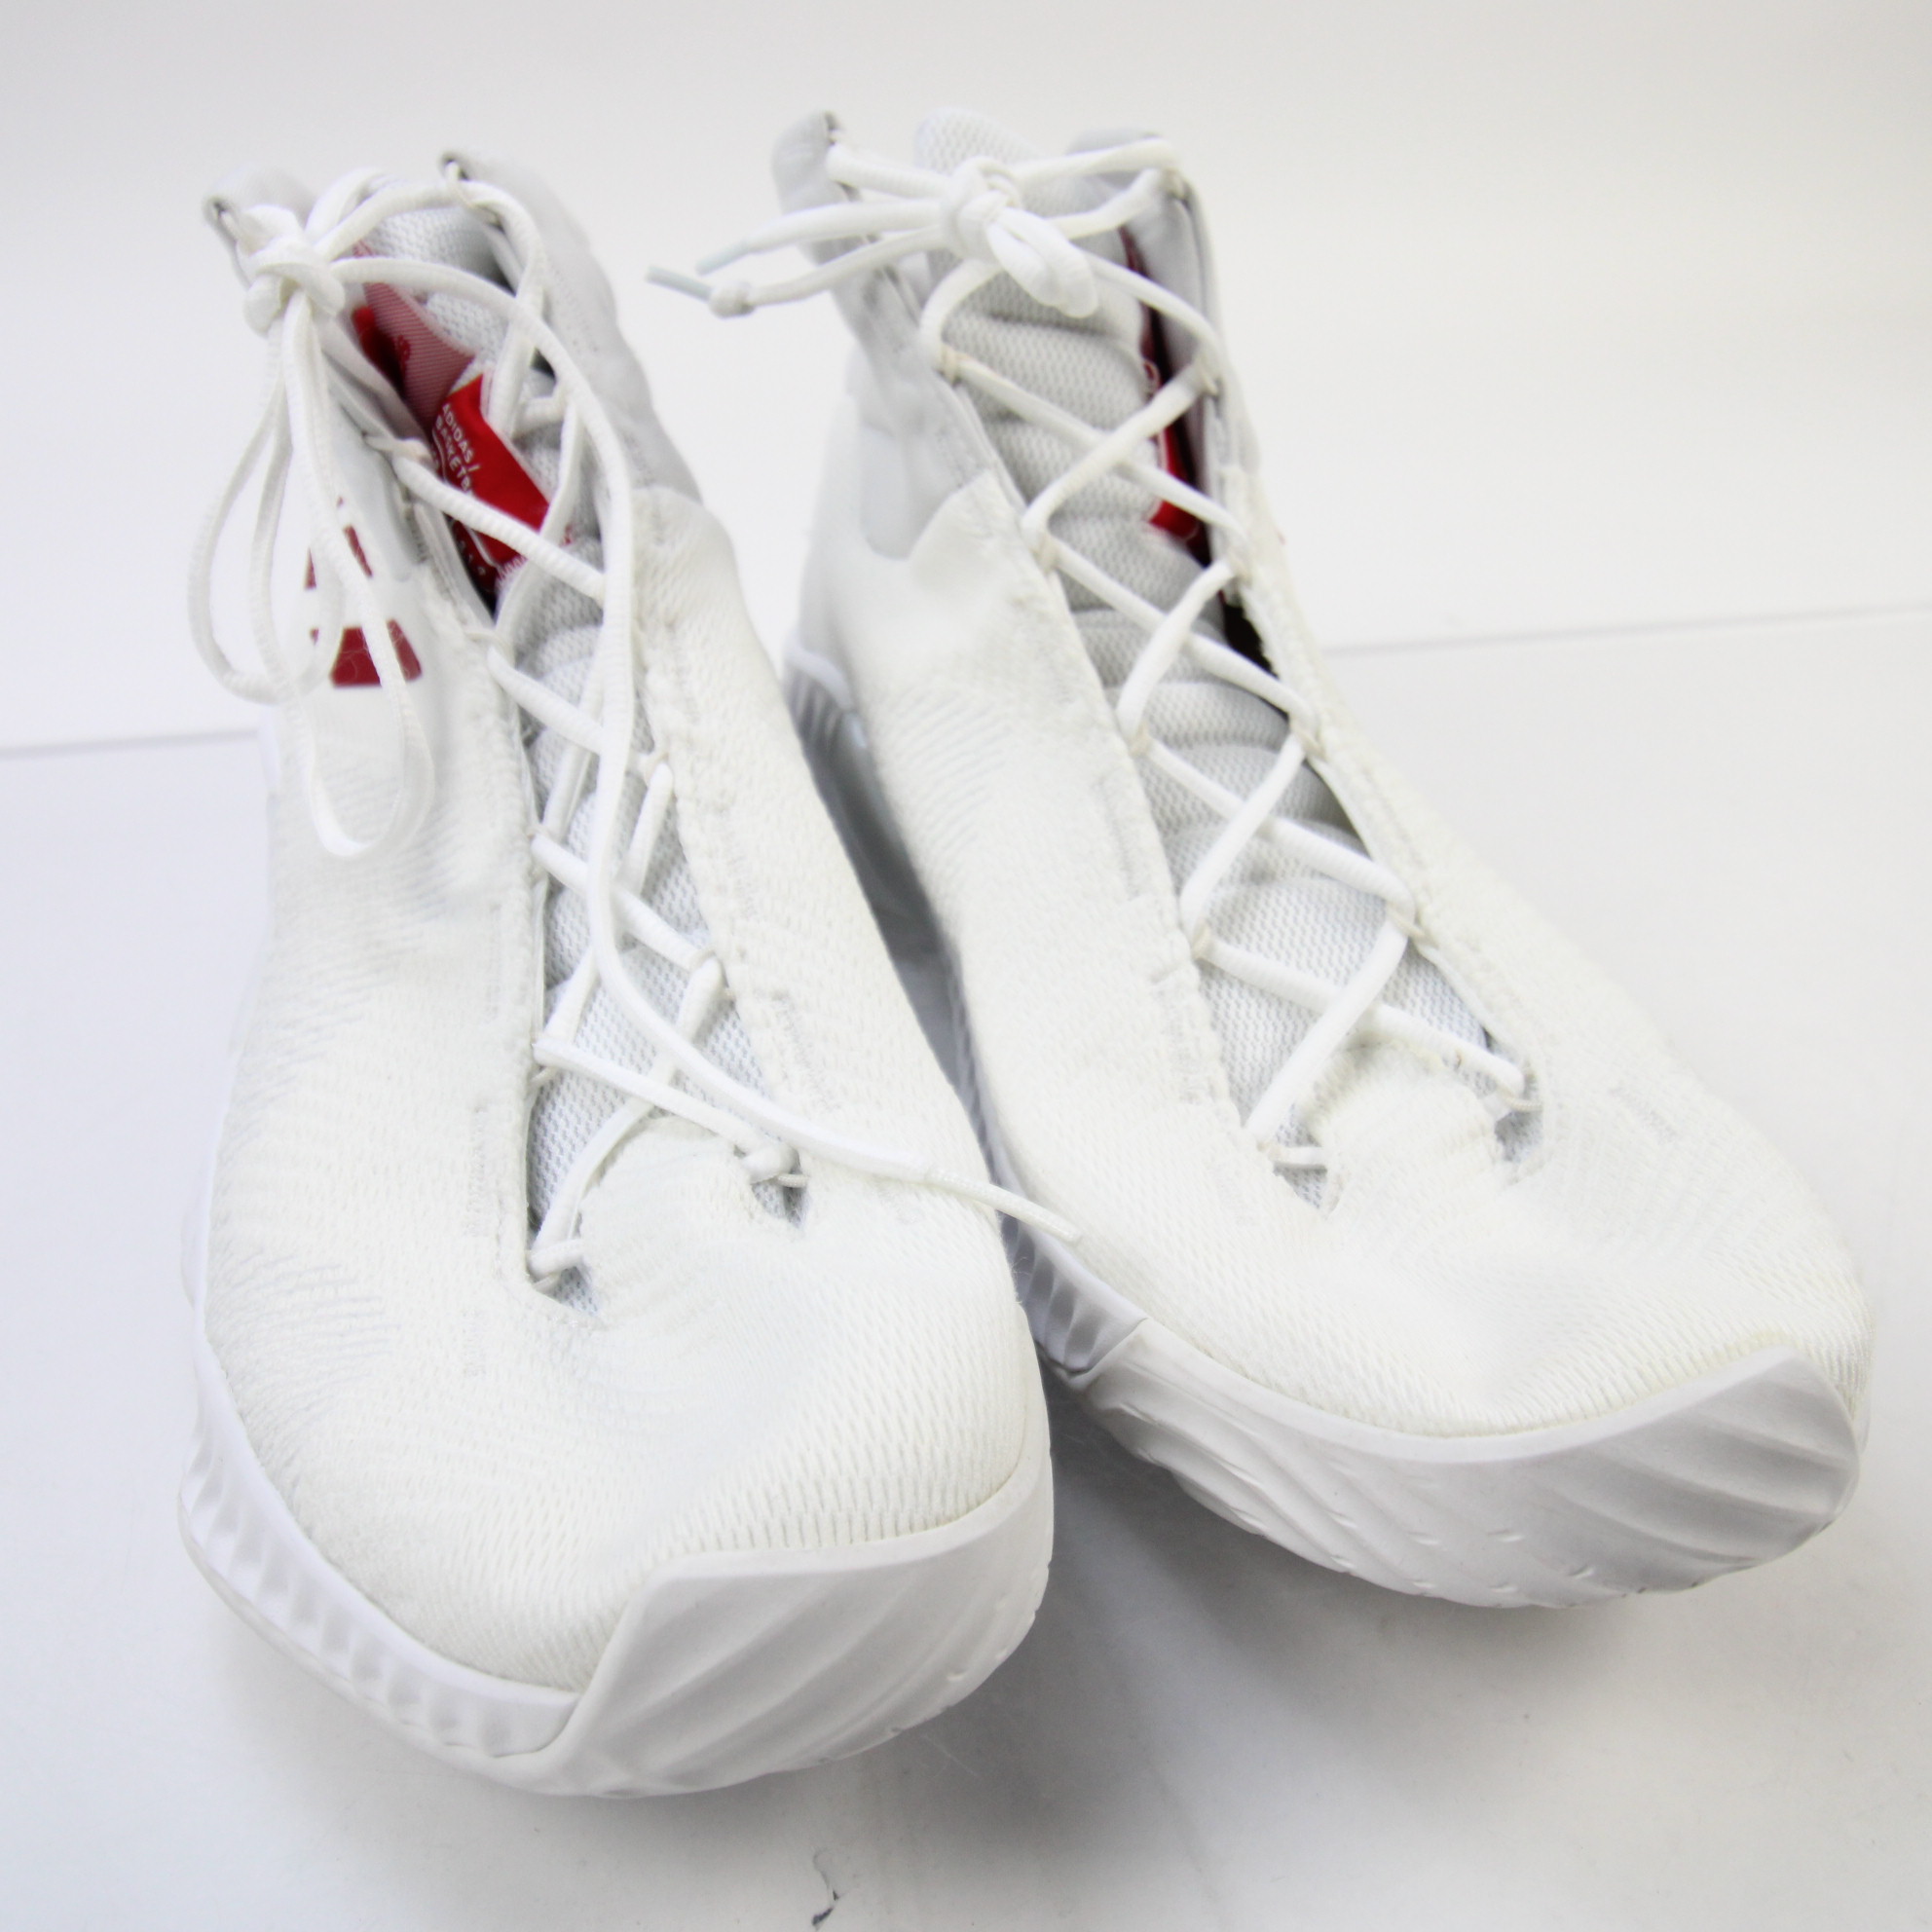 adidas Basketball Shoe Men's White/Red Used | eBay